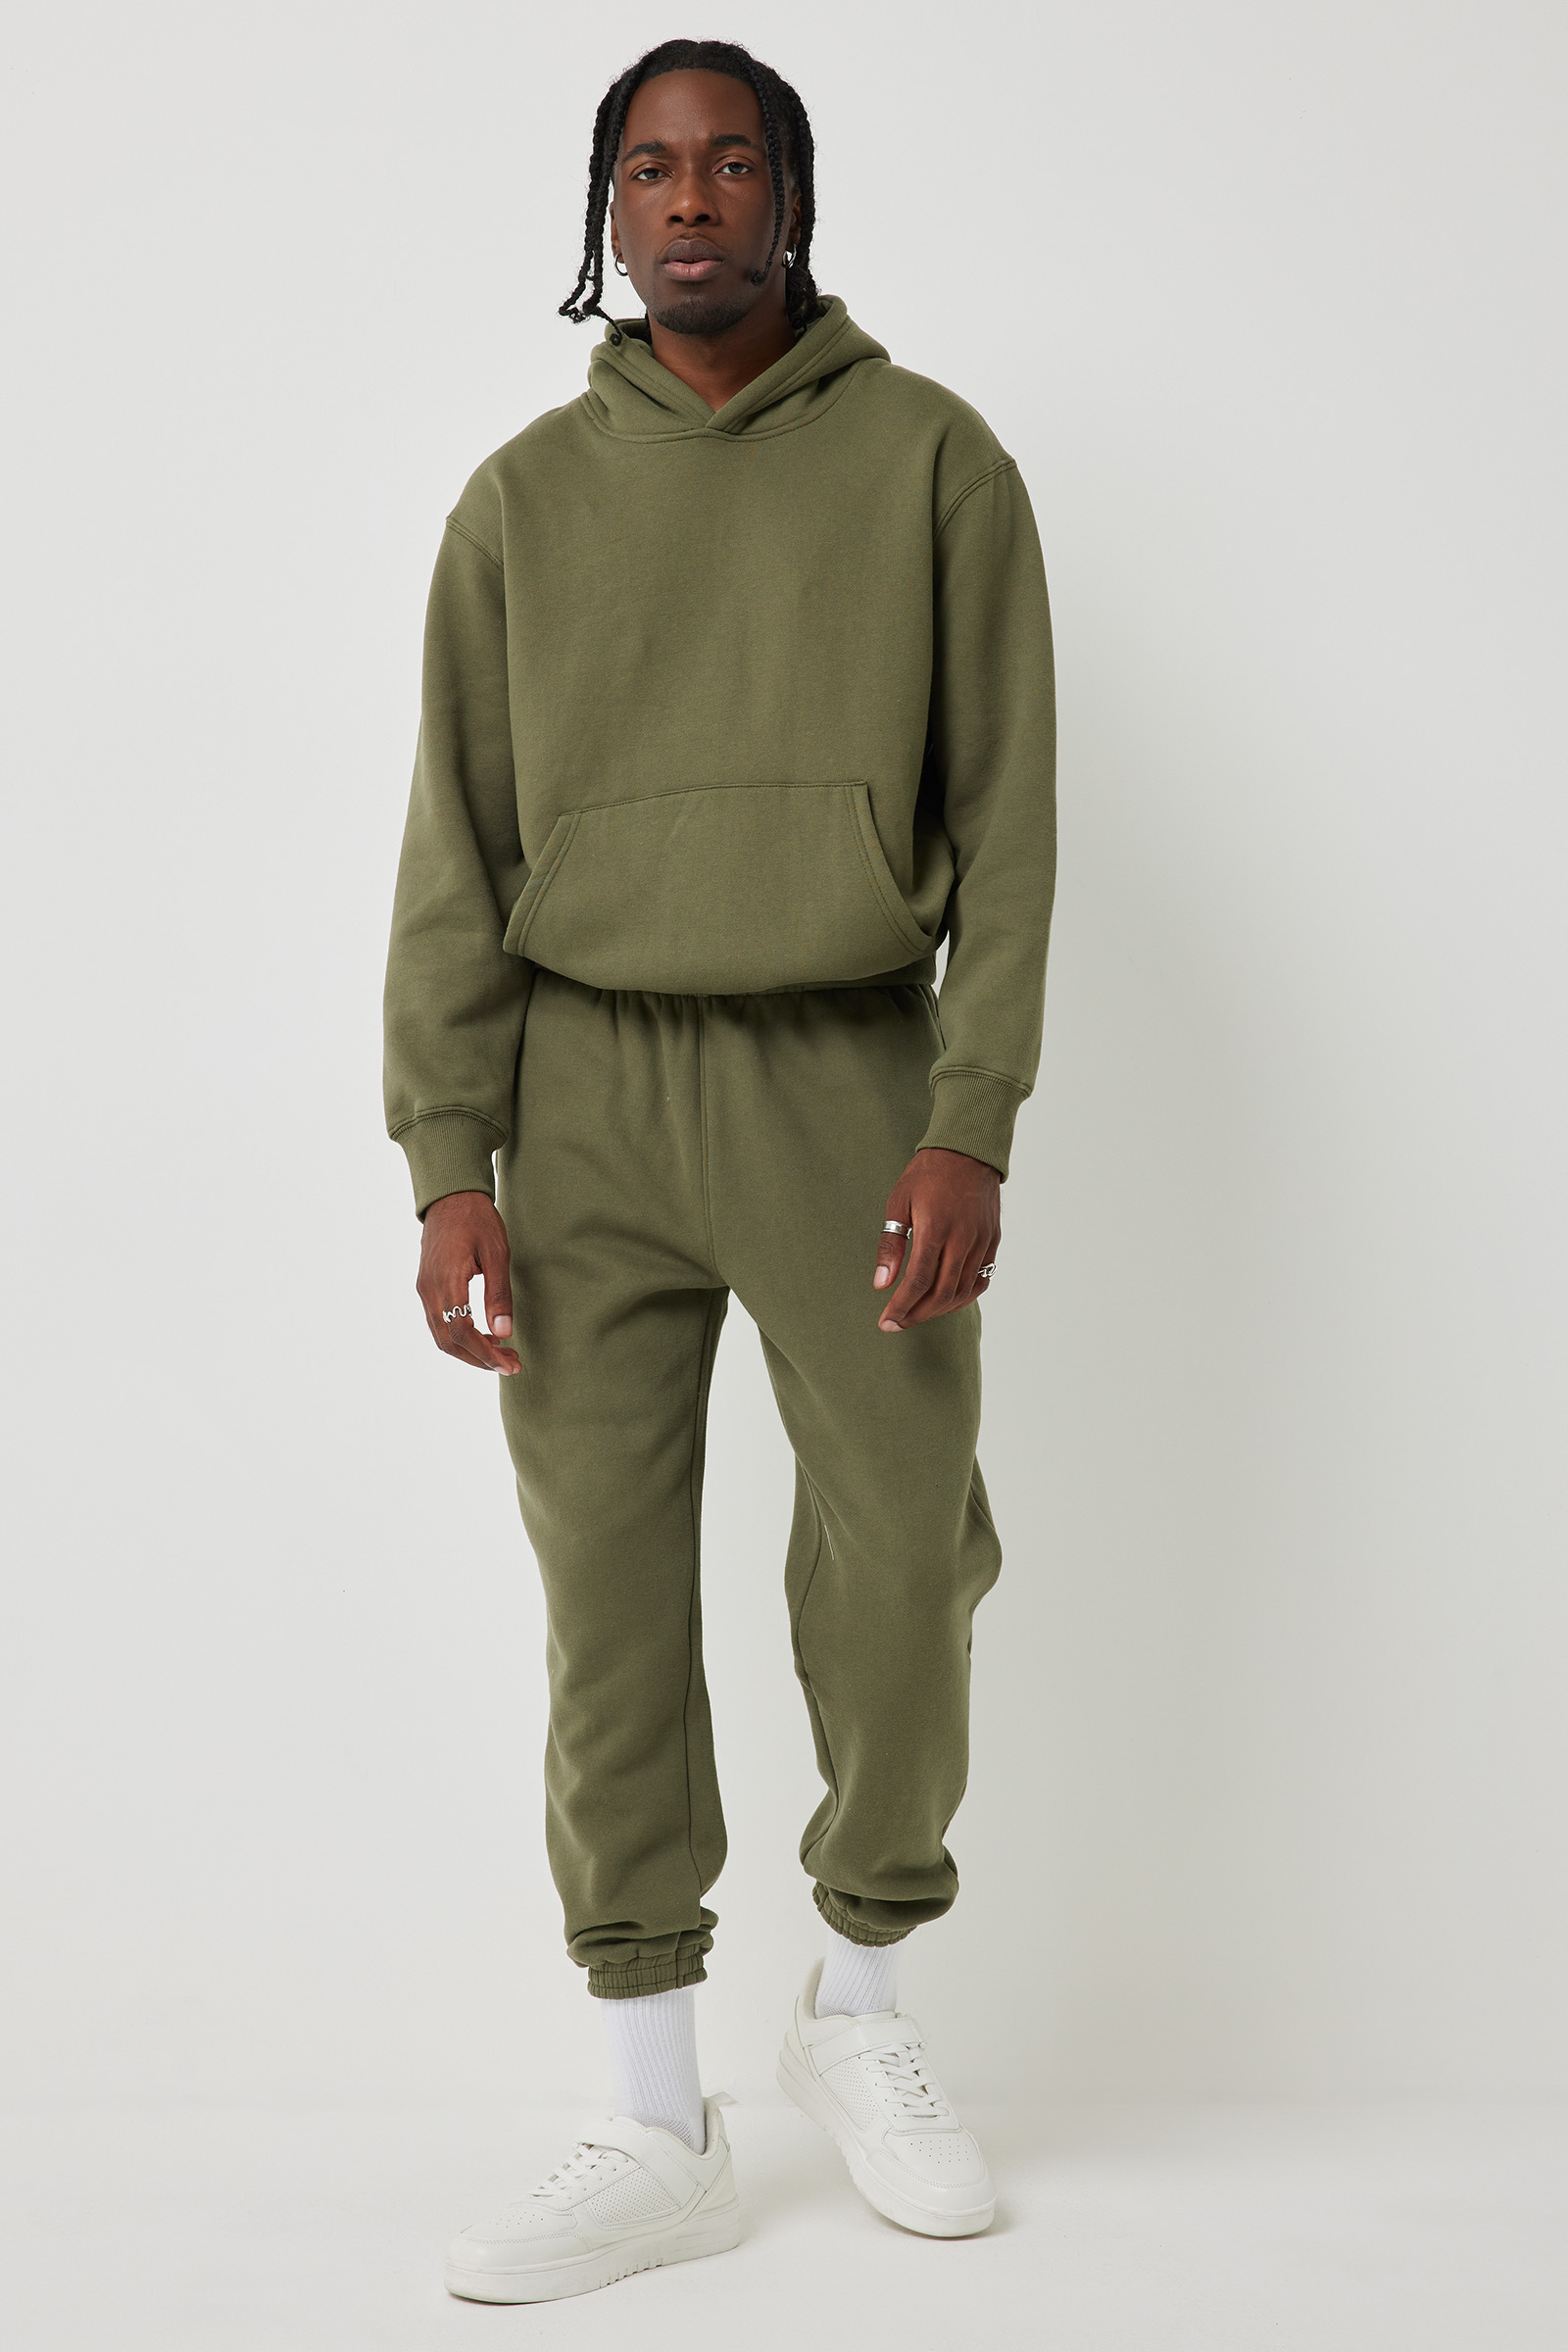 Ardene Man Hidden Drawstring Sweatpants For Men in Khaki | Size | Polyester/Cotton | Fleece-Lined